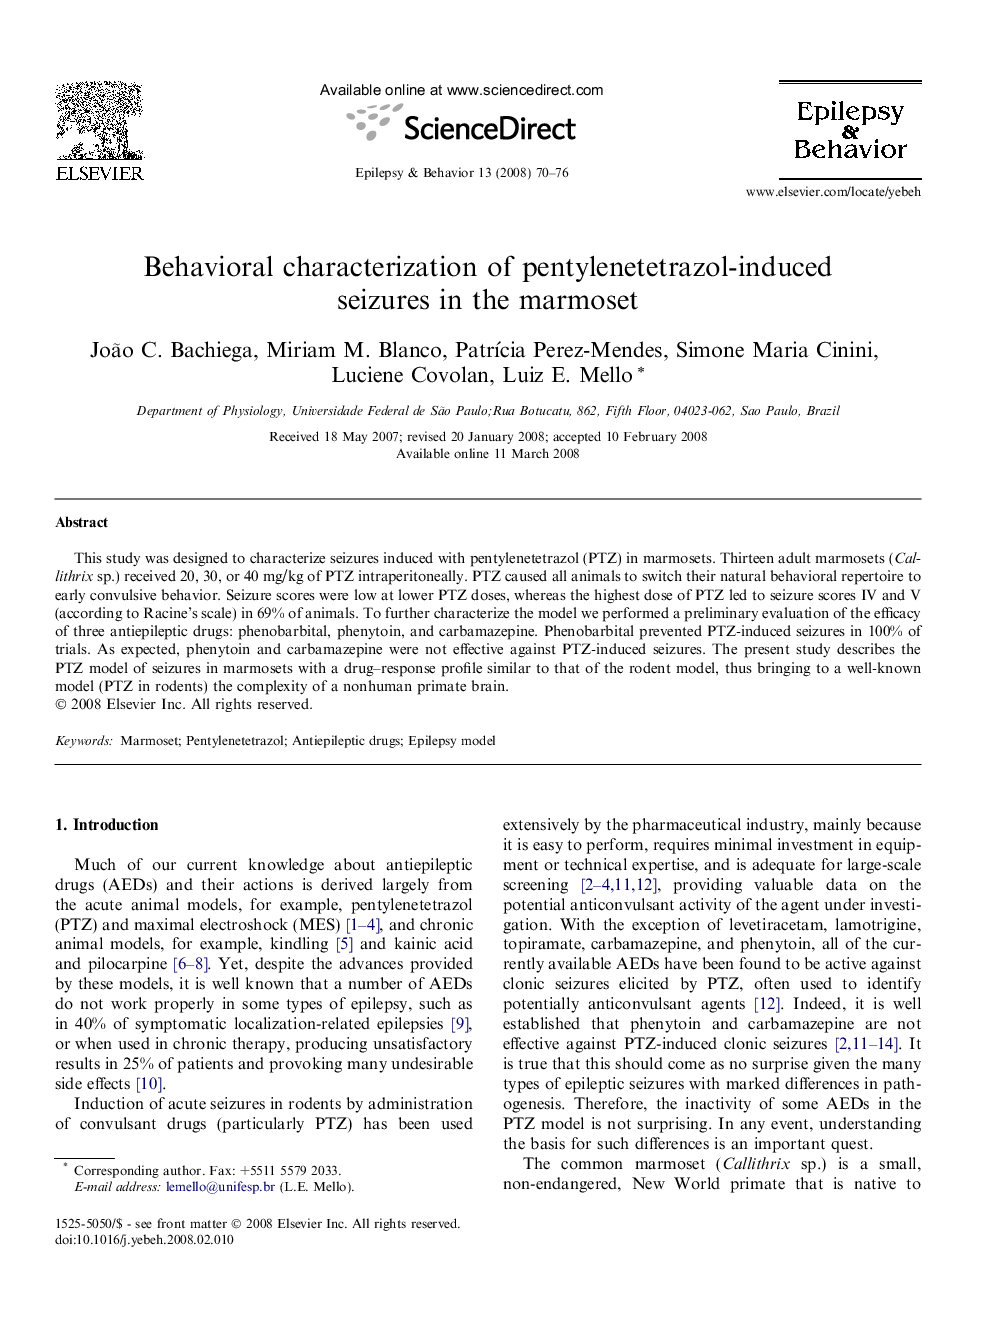 Behavioral characterization of pentylenetetrazol-induced seizures in the marmoset